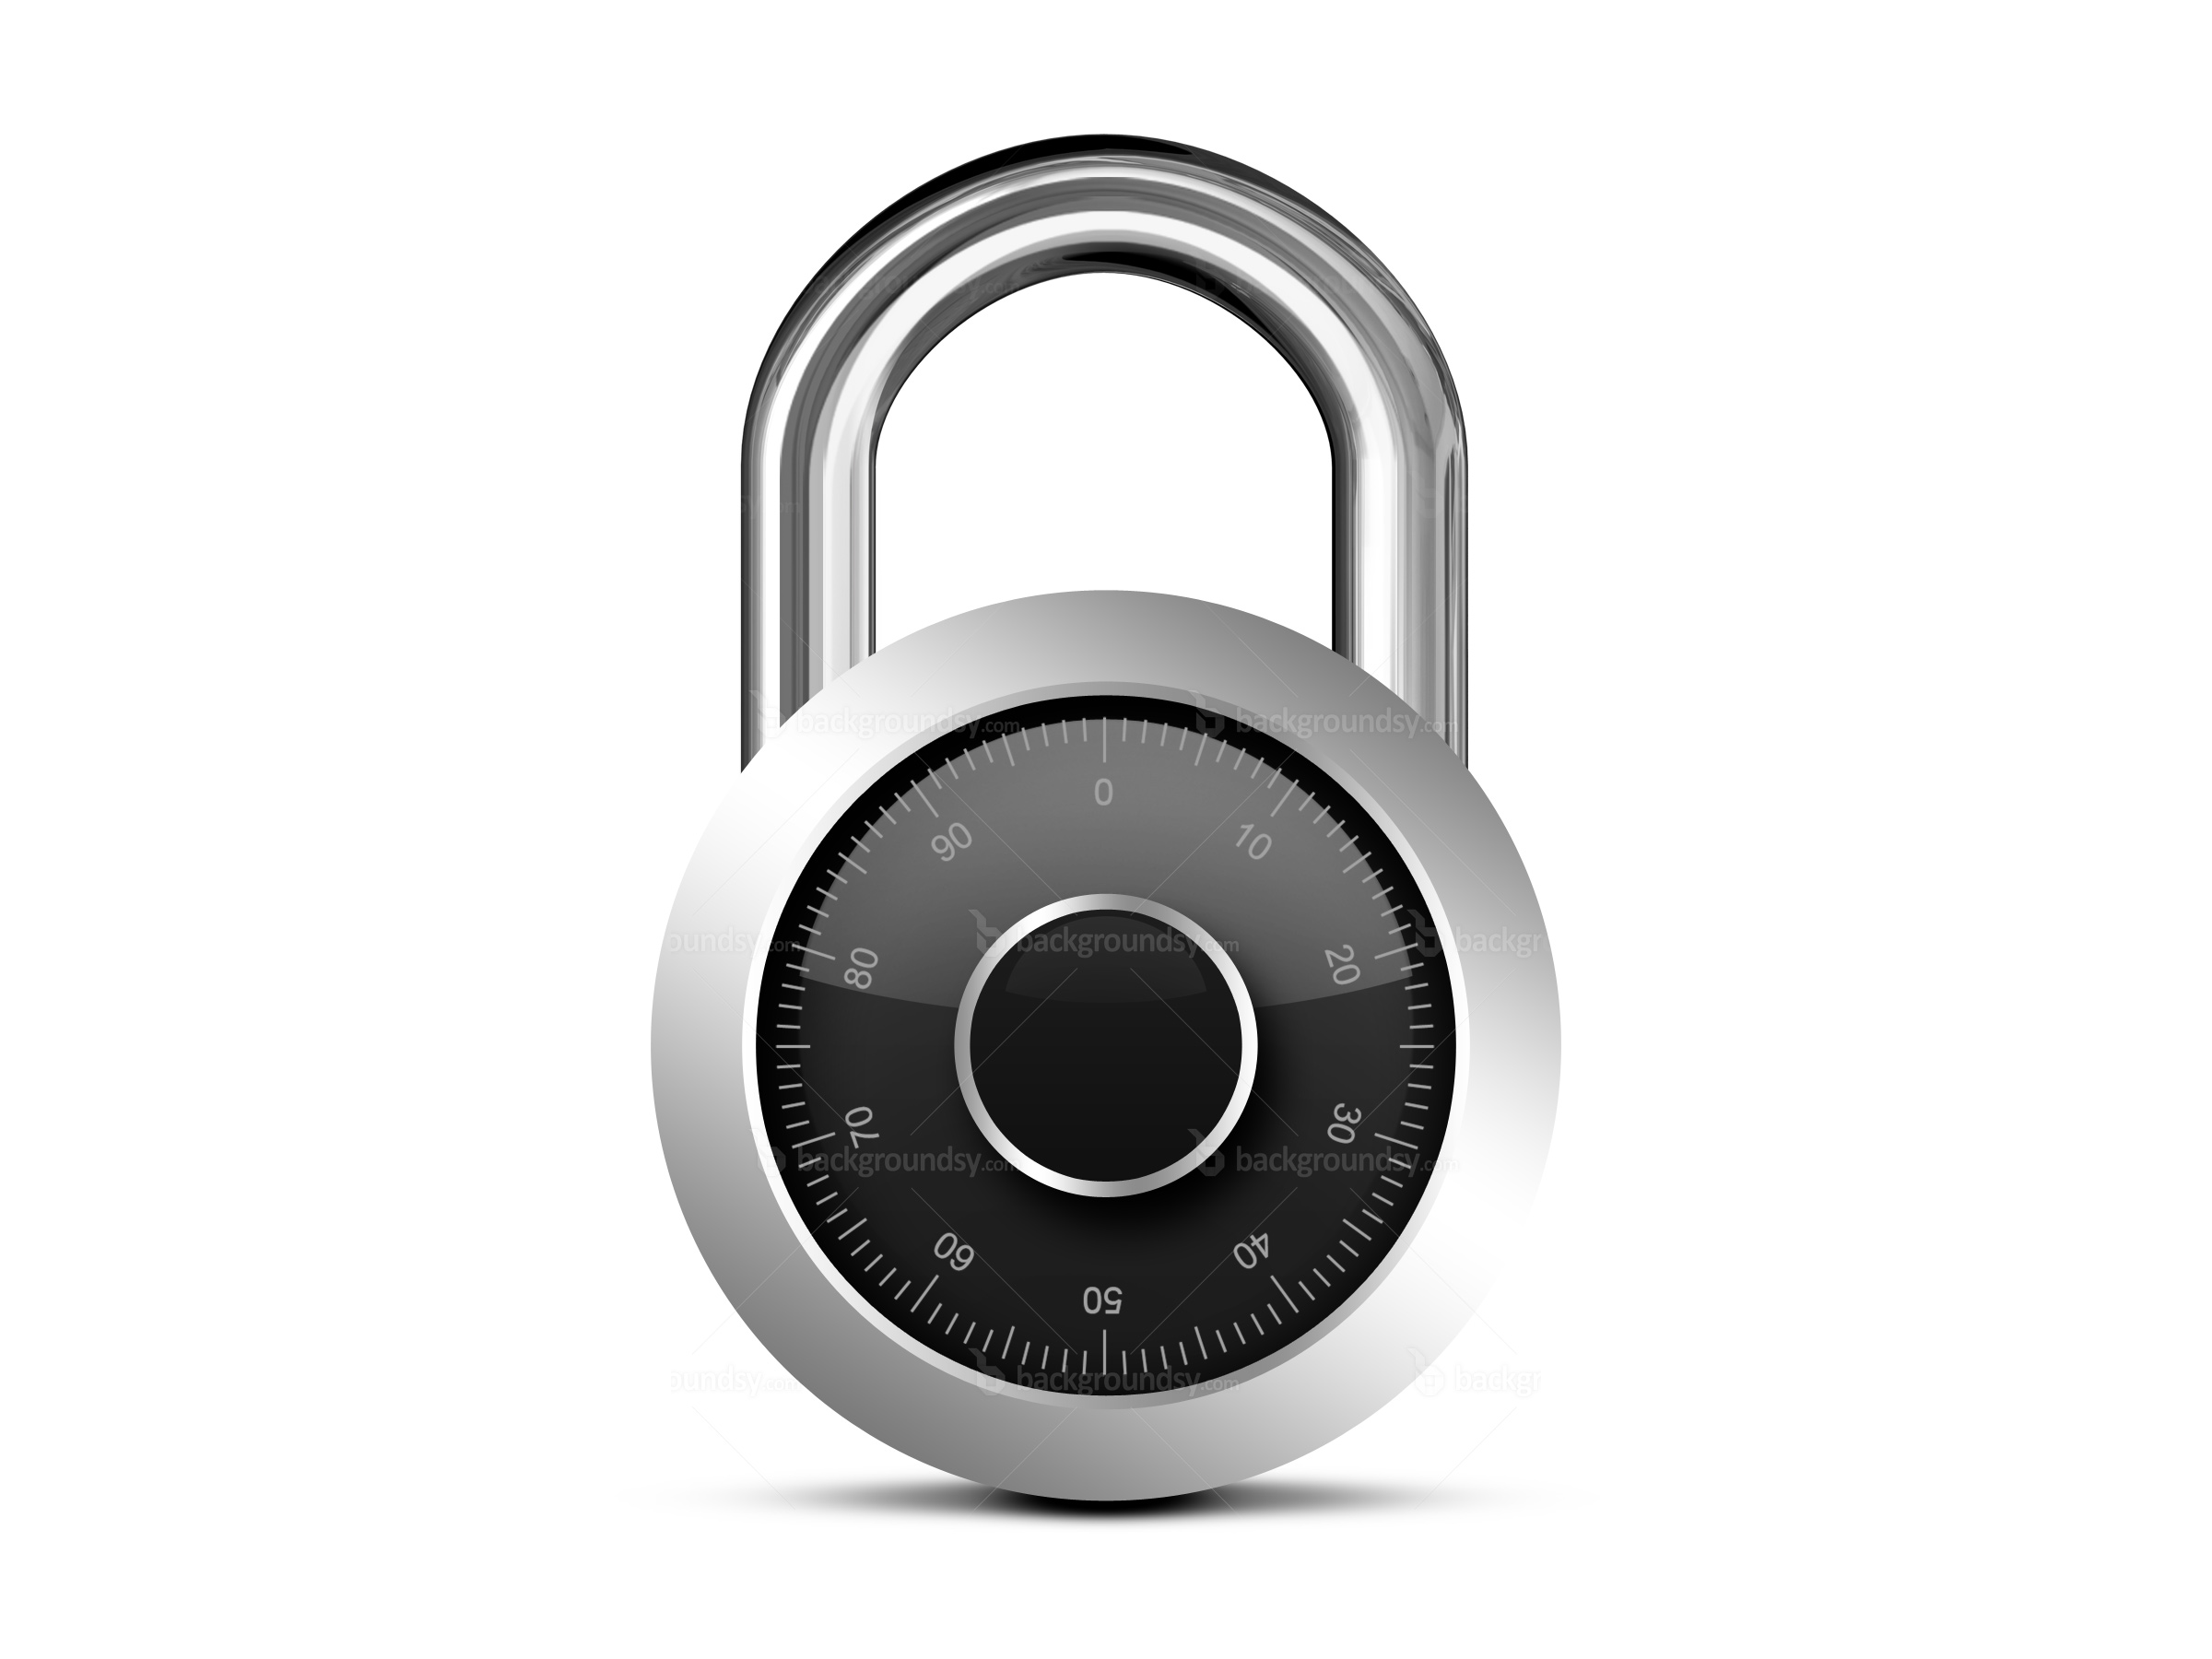 Security Lock Icon